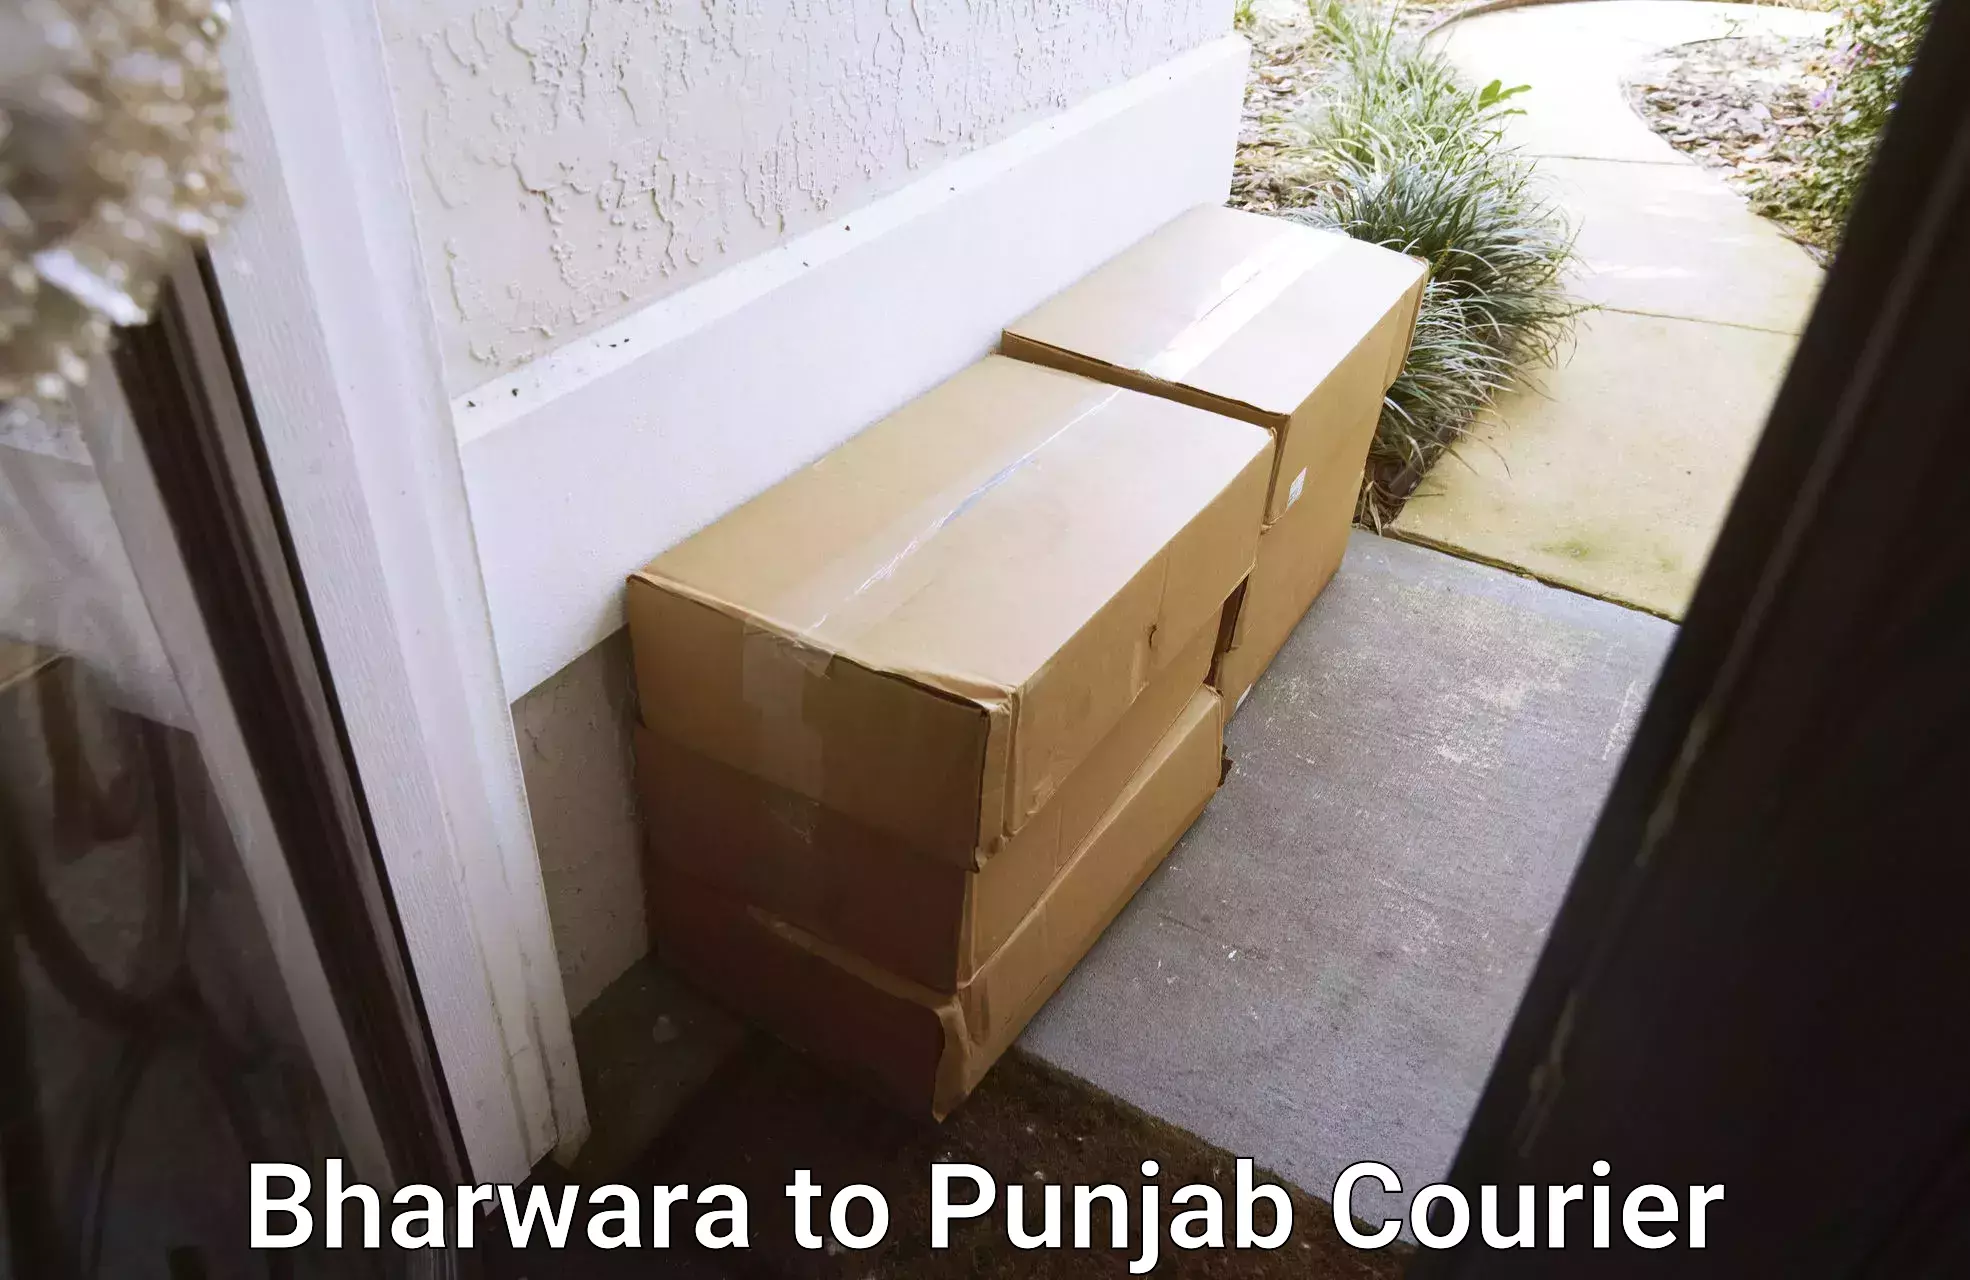 Specialized moving company Bharwara to Punjab